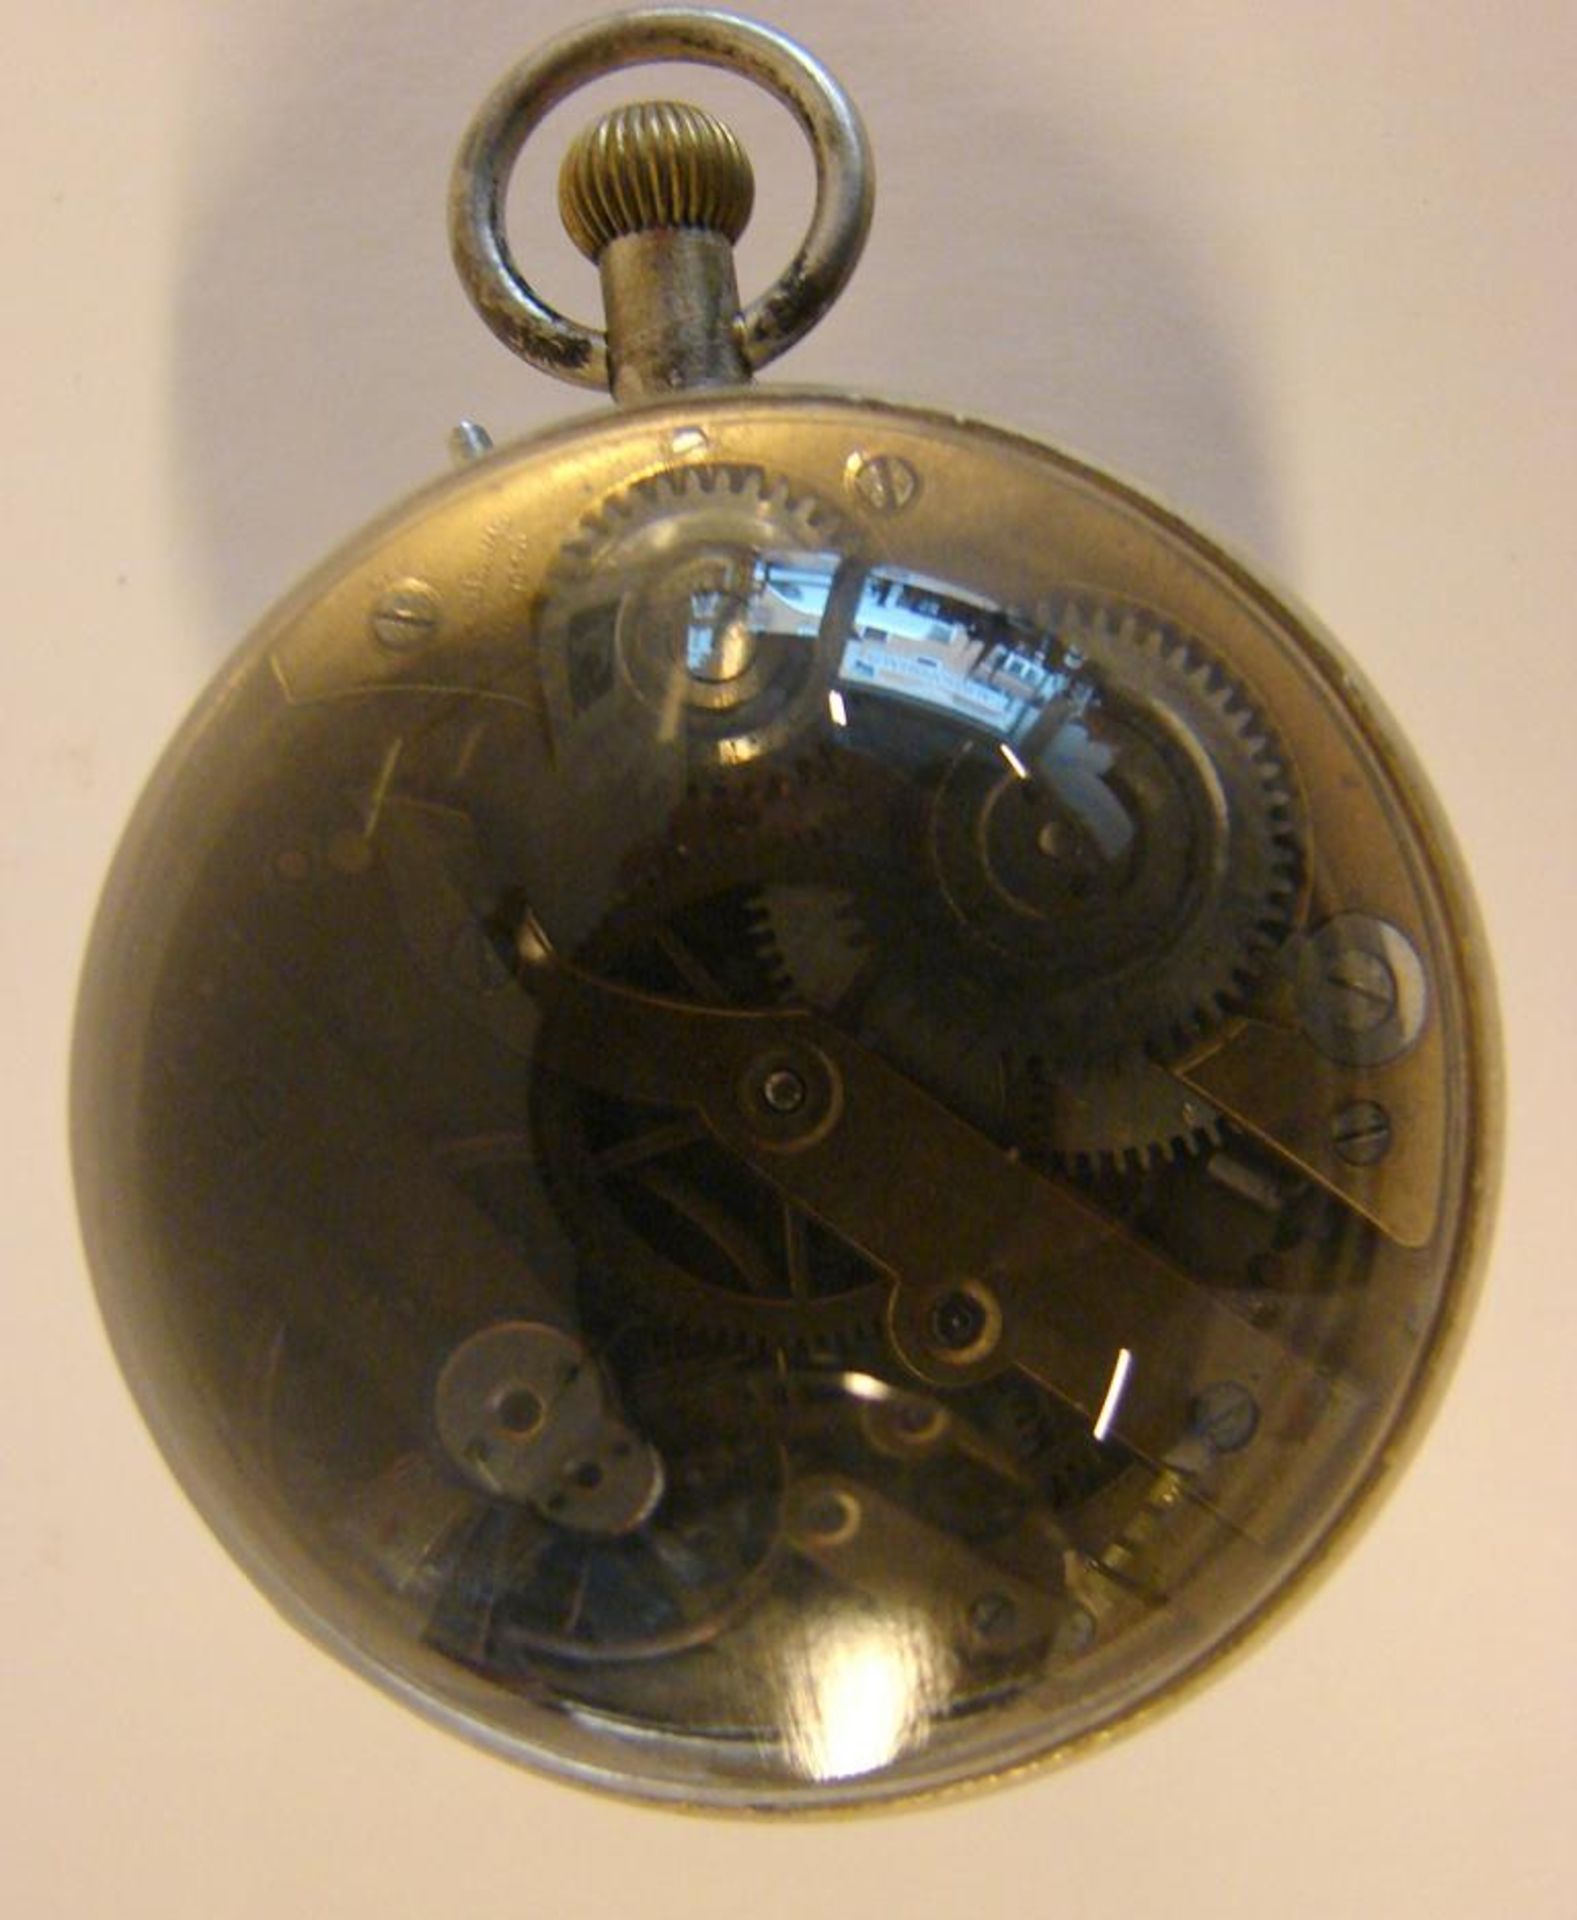 Kugeluhr, Allbet Swiss Made, Lupenverglasung, Dm.ca. 5 cm - Bild 2 aus 2